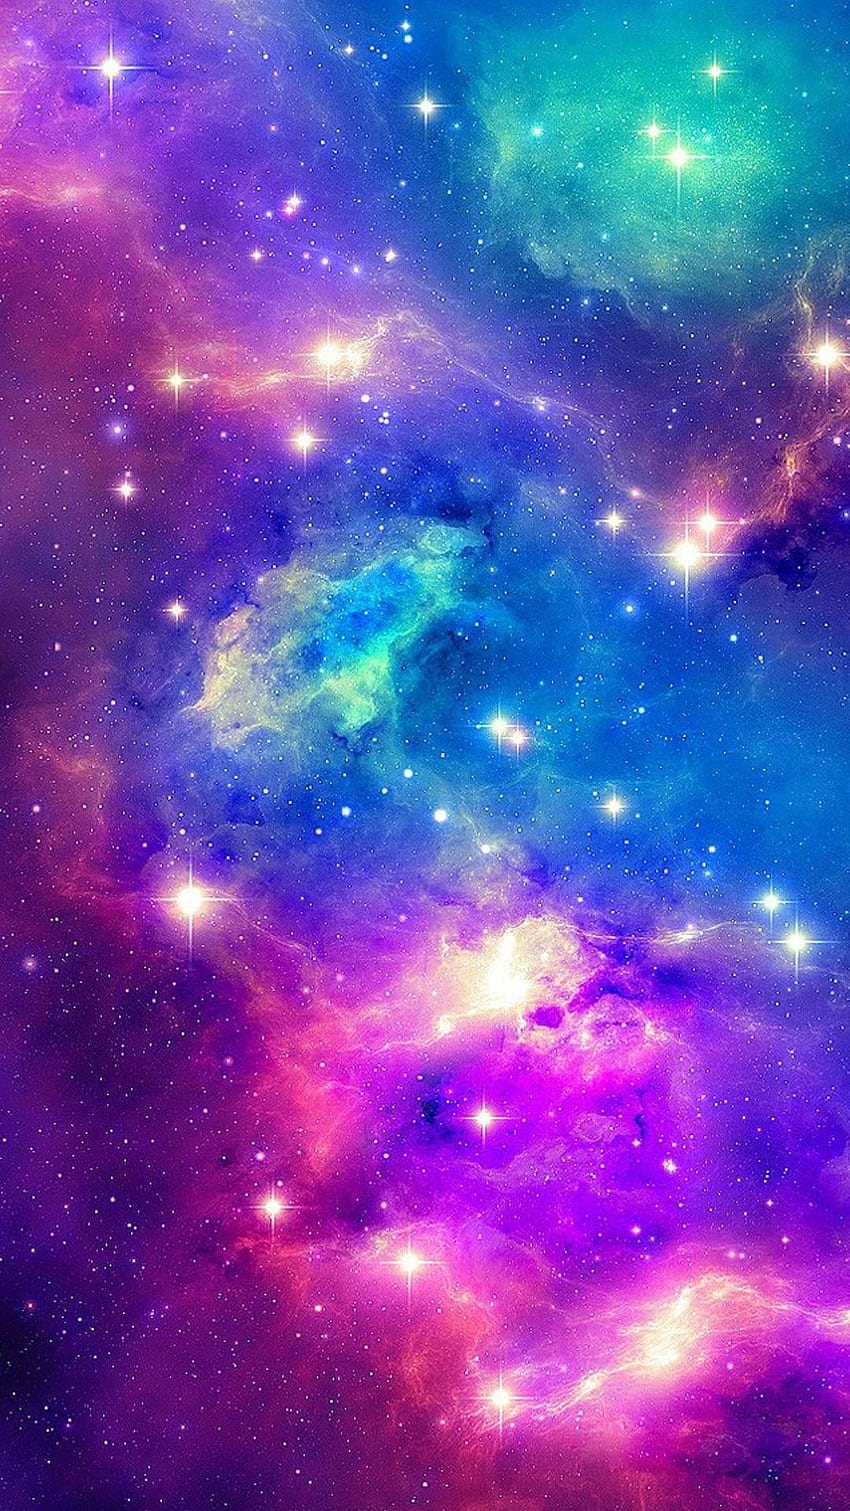 A galaxy wallpaper with stars and nebulas - Galaxy